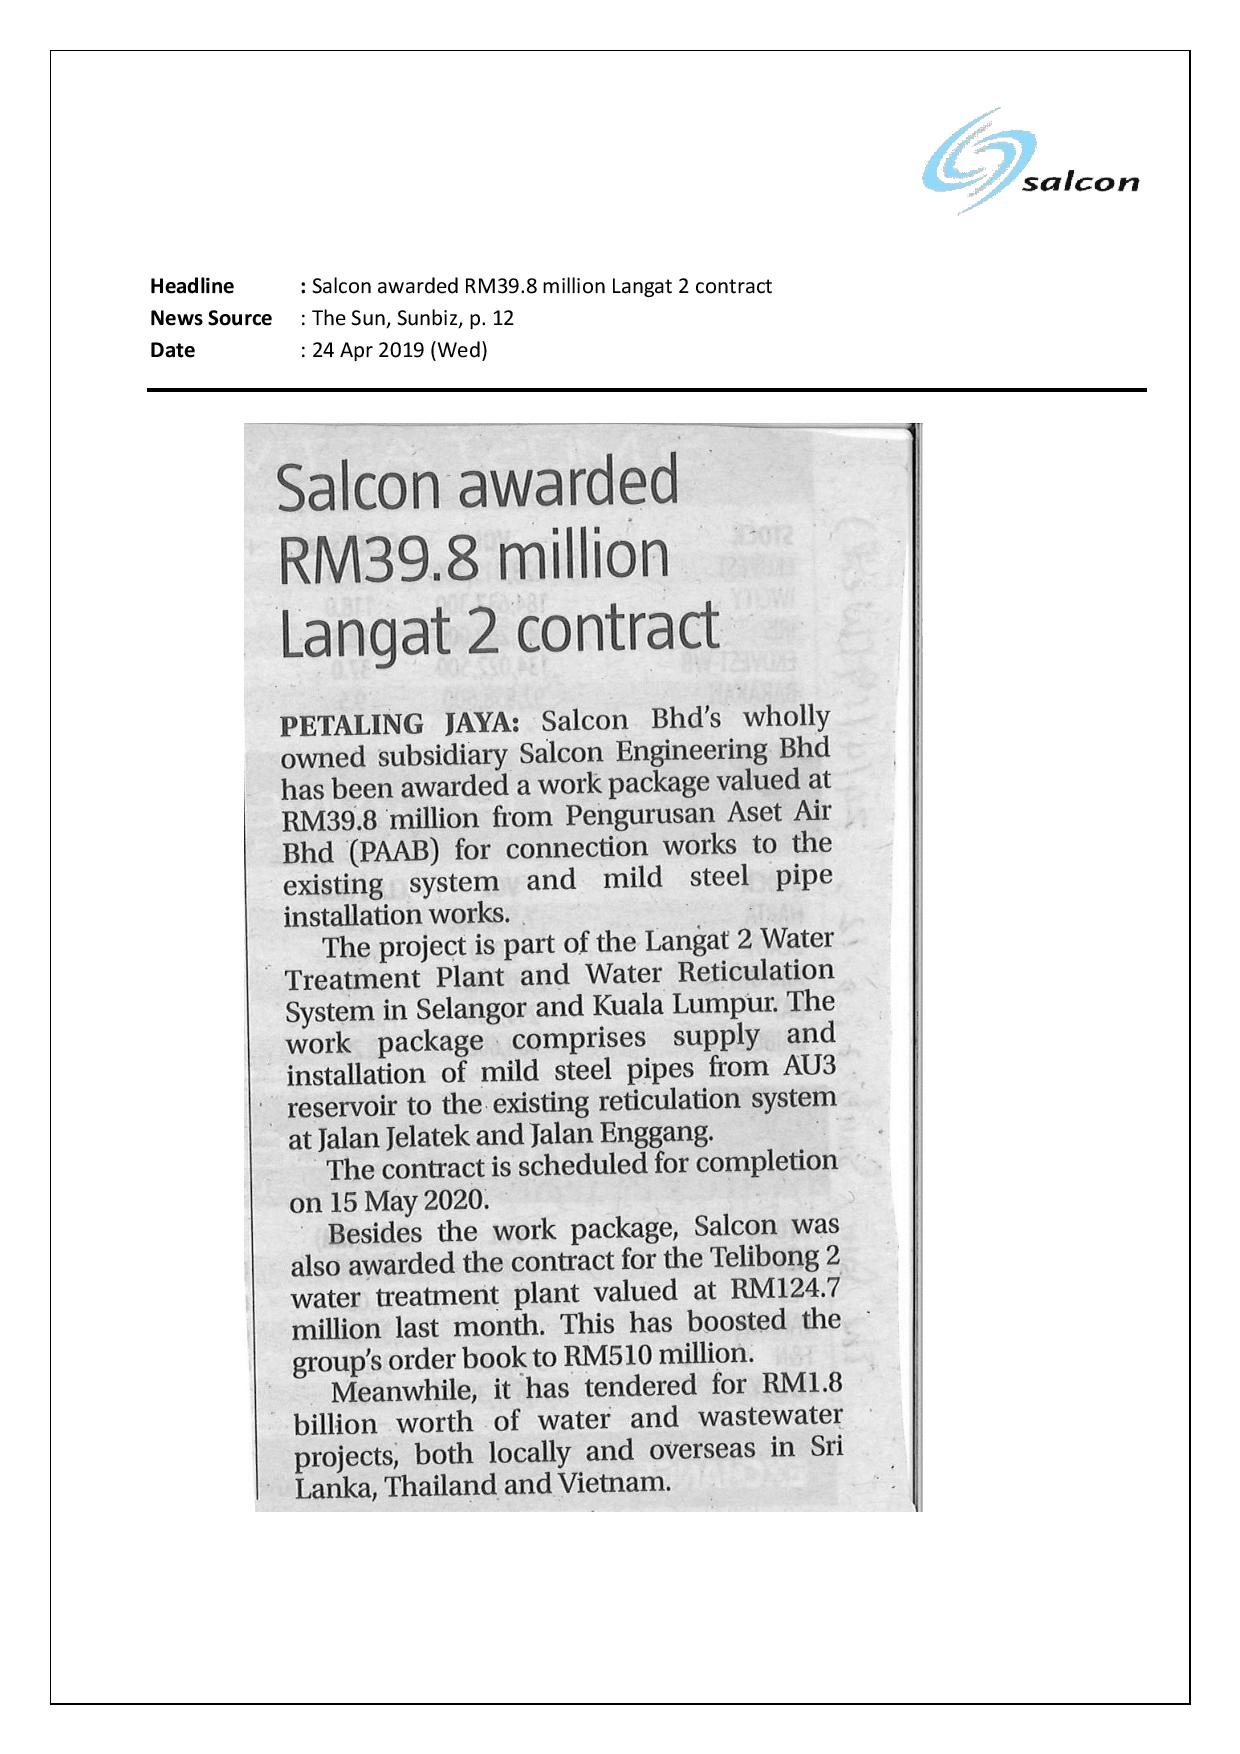 Salcon awarded RM39.8 million Langat 2 contract